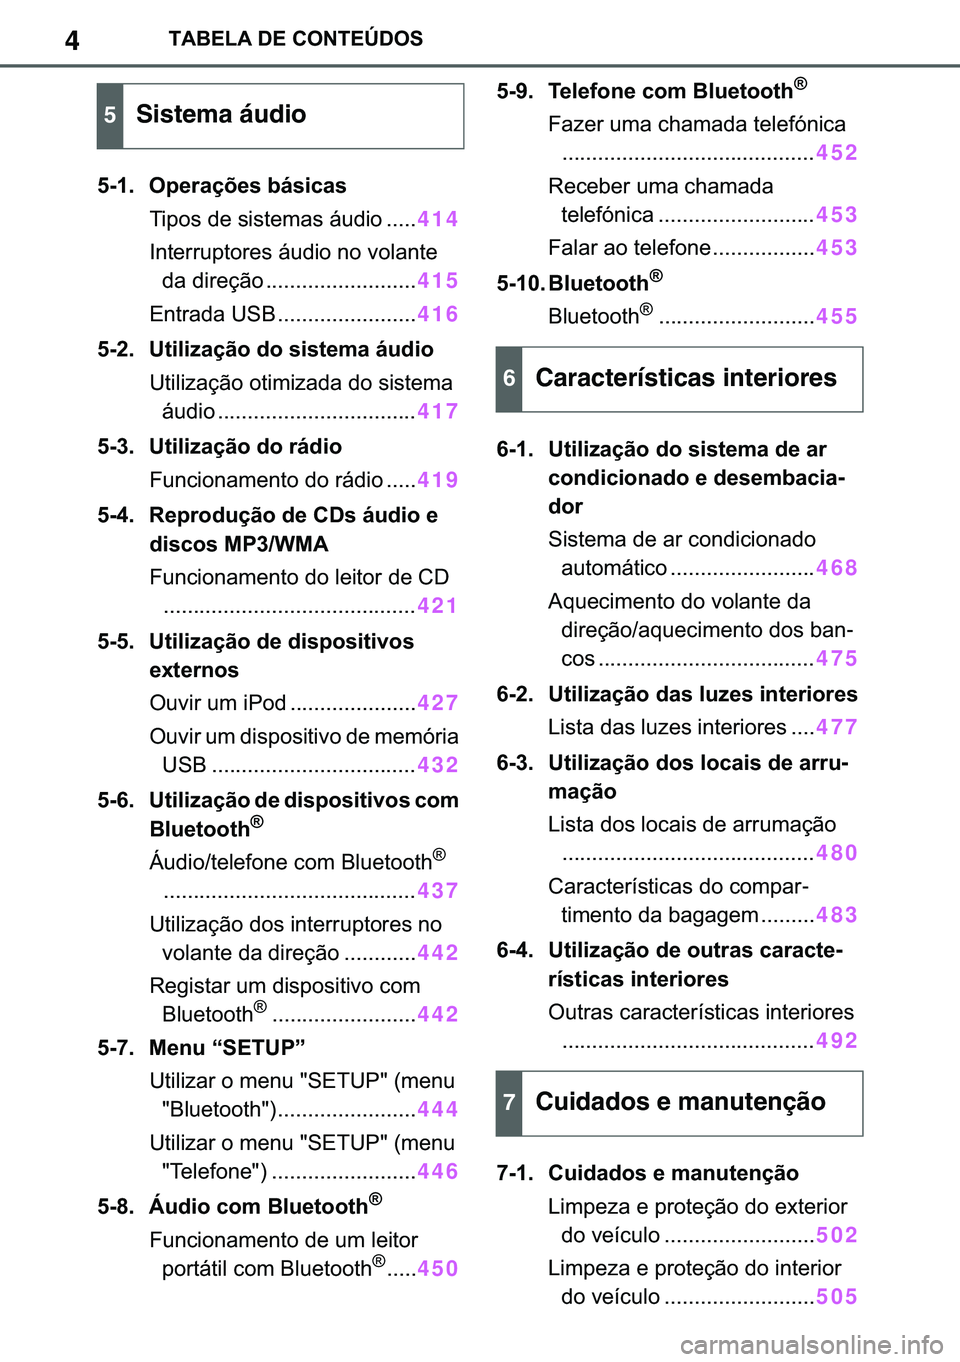 TOYOTA COROLLA HATCHBACK 2020  Manual de utilização (in Portuguese) 4�7�$�%�(�/�$���(��&�2�1�7�(�Ò��2�6
���� �2�S�H�U�D�o�}�H�V��E�i�V�L�F�D�V
�7�L�S�R�V��G�H��V�L�V�W�H�P�D�V��i�X�G�L�R �����414
�,�Q�W�H�U�U�X�S�W�R�U�H�V��i�X�G�L�R��Q�R��Y�R�O�D